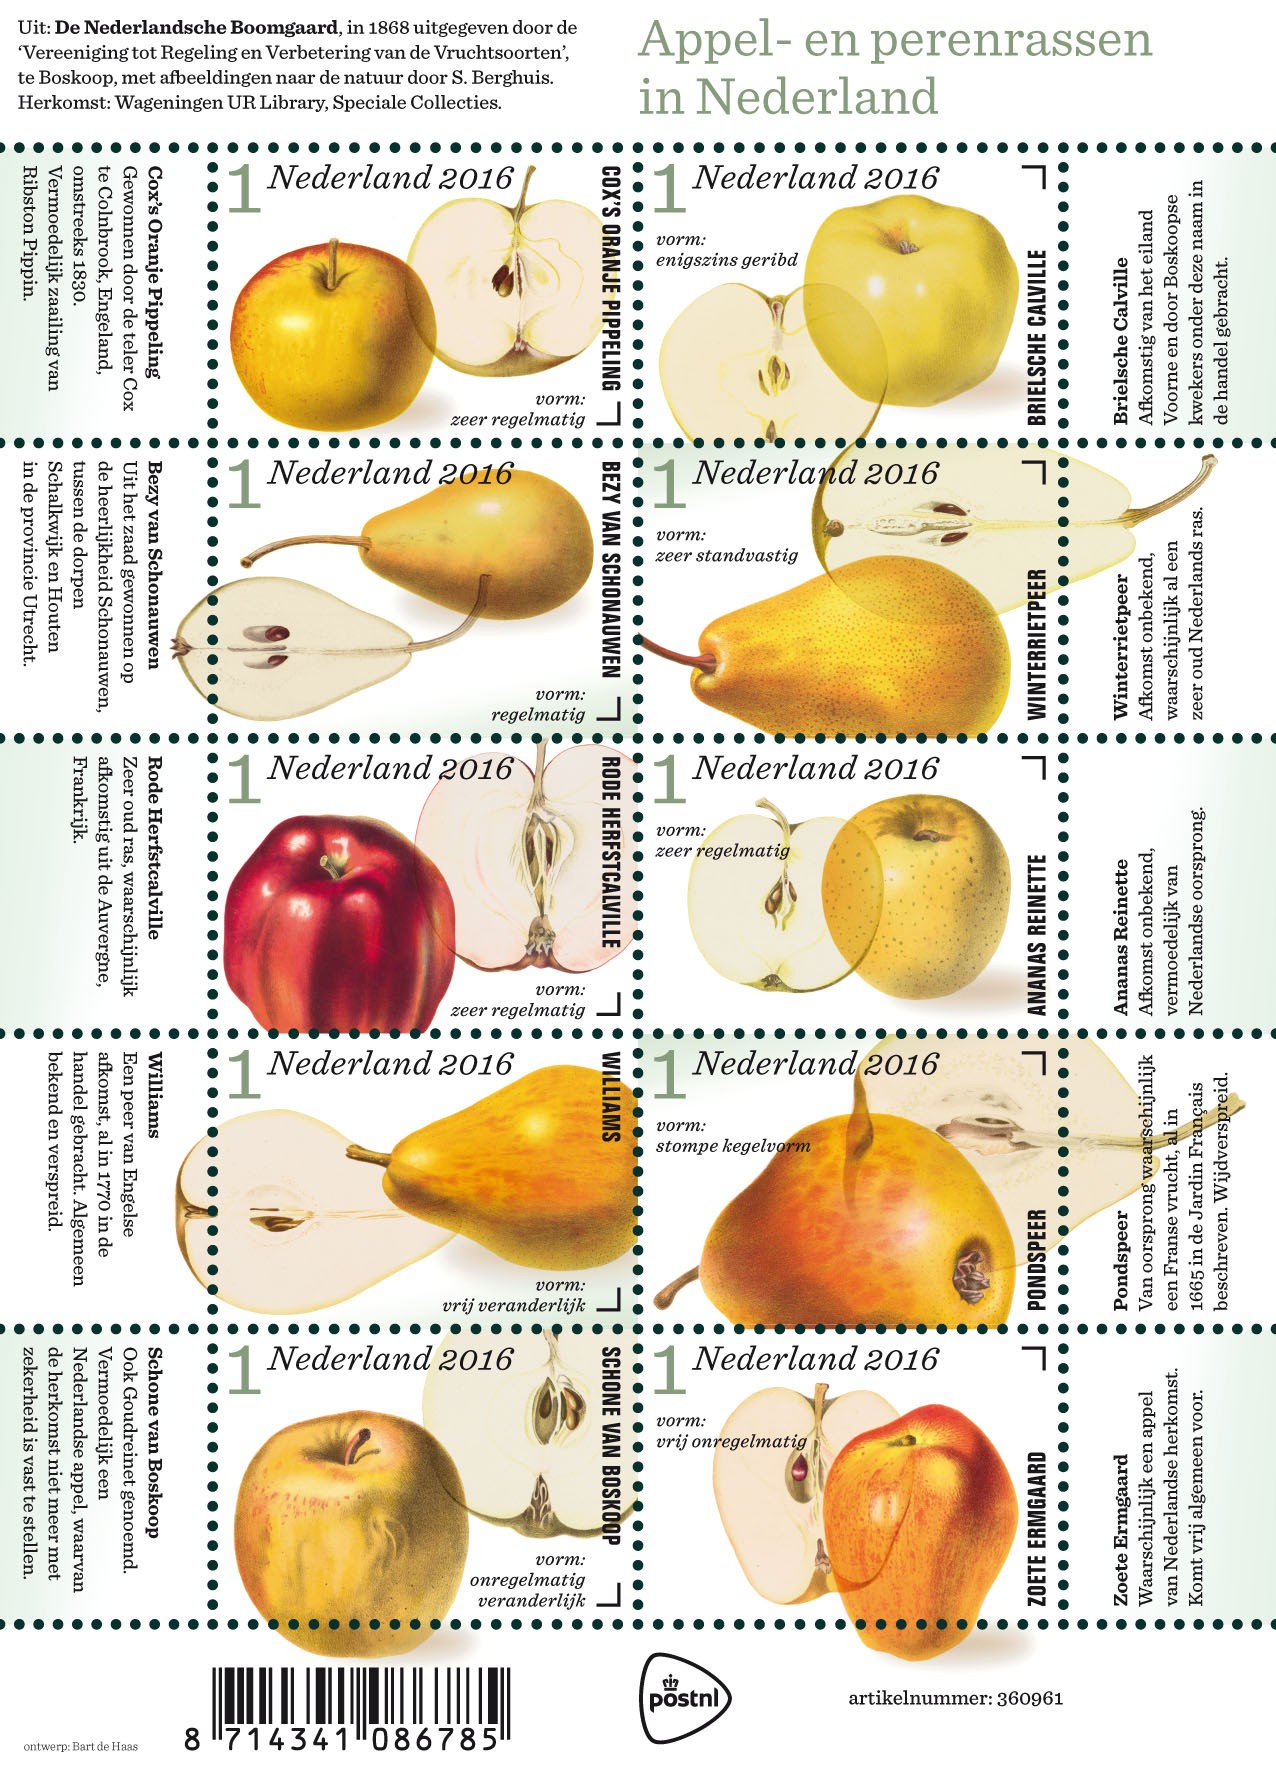 Appel en perenrassen